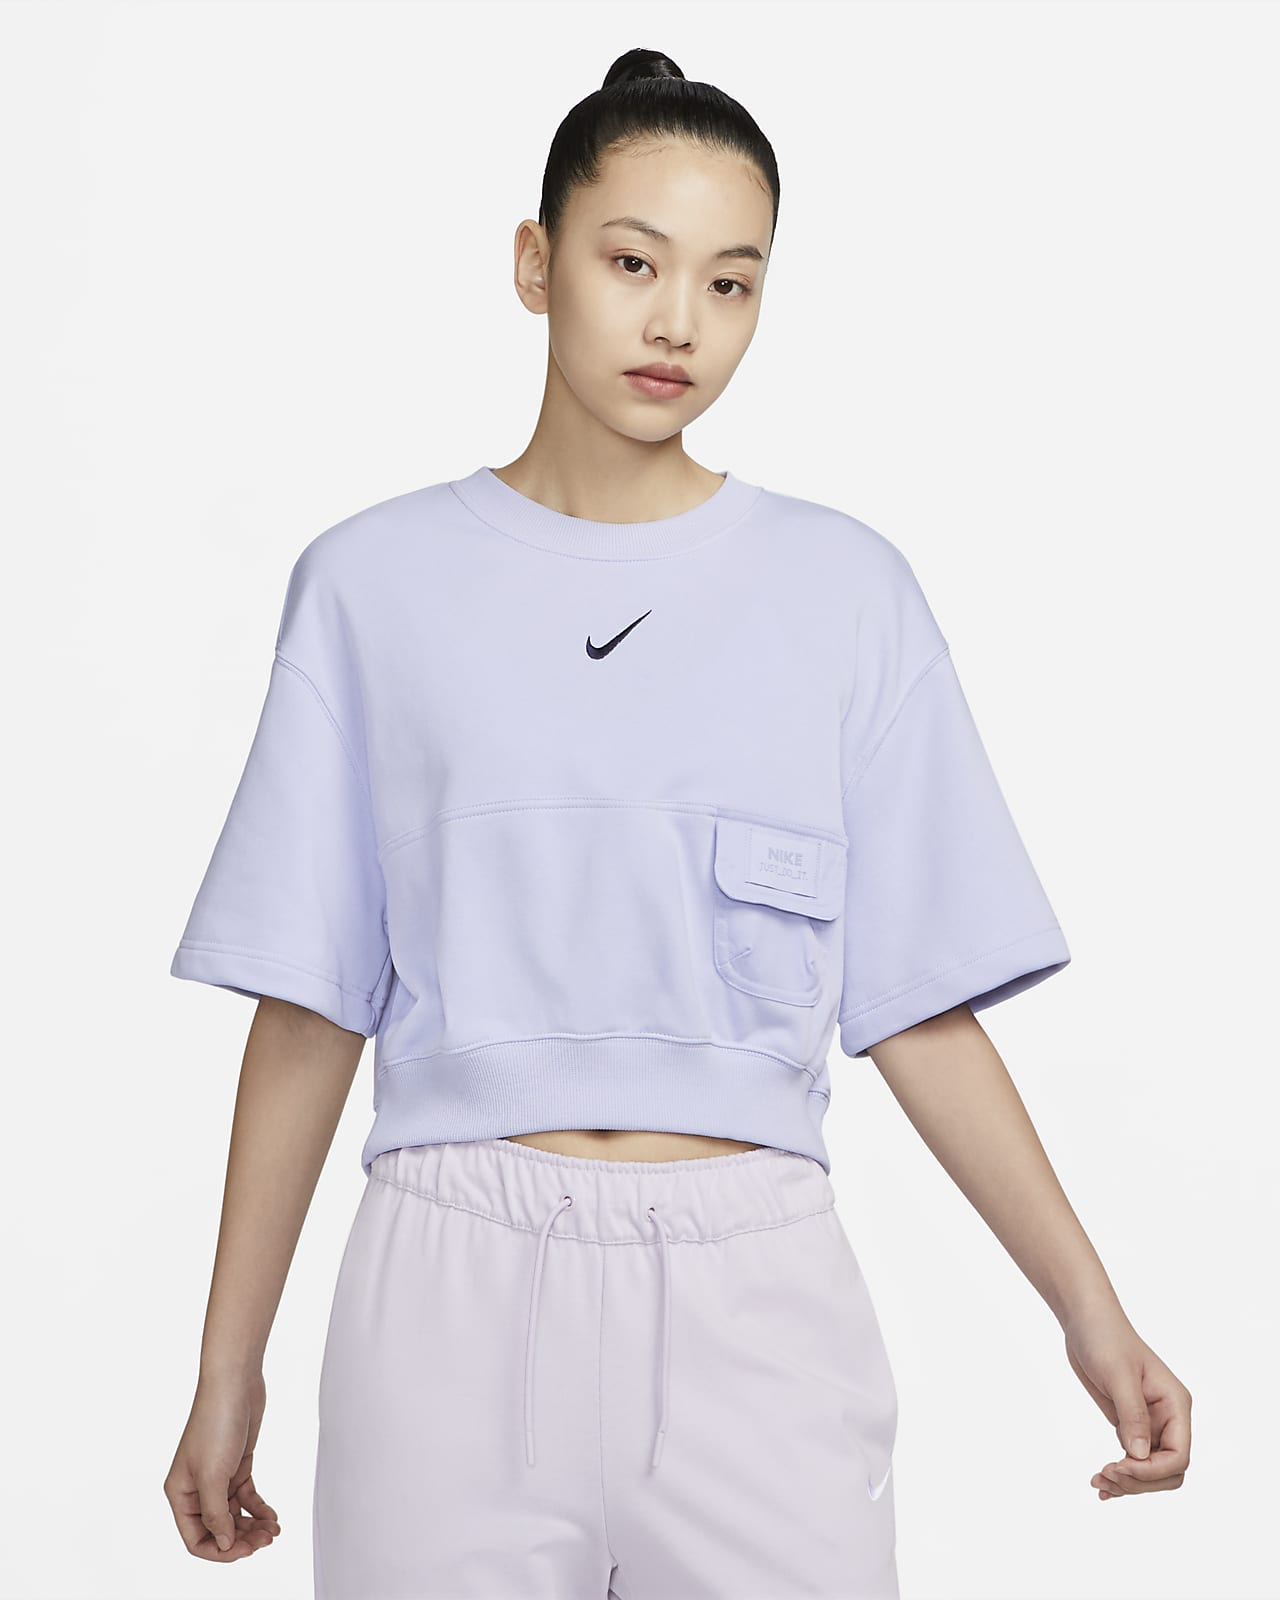 Nike Sportswear Women's French Terry Crew-Neck Crop Top